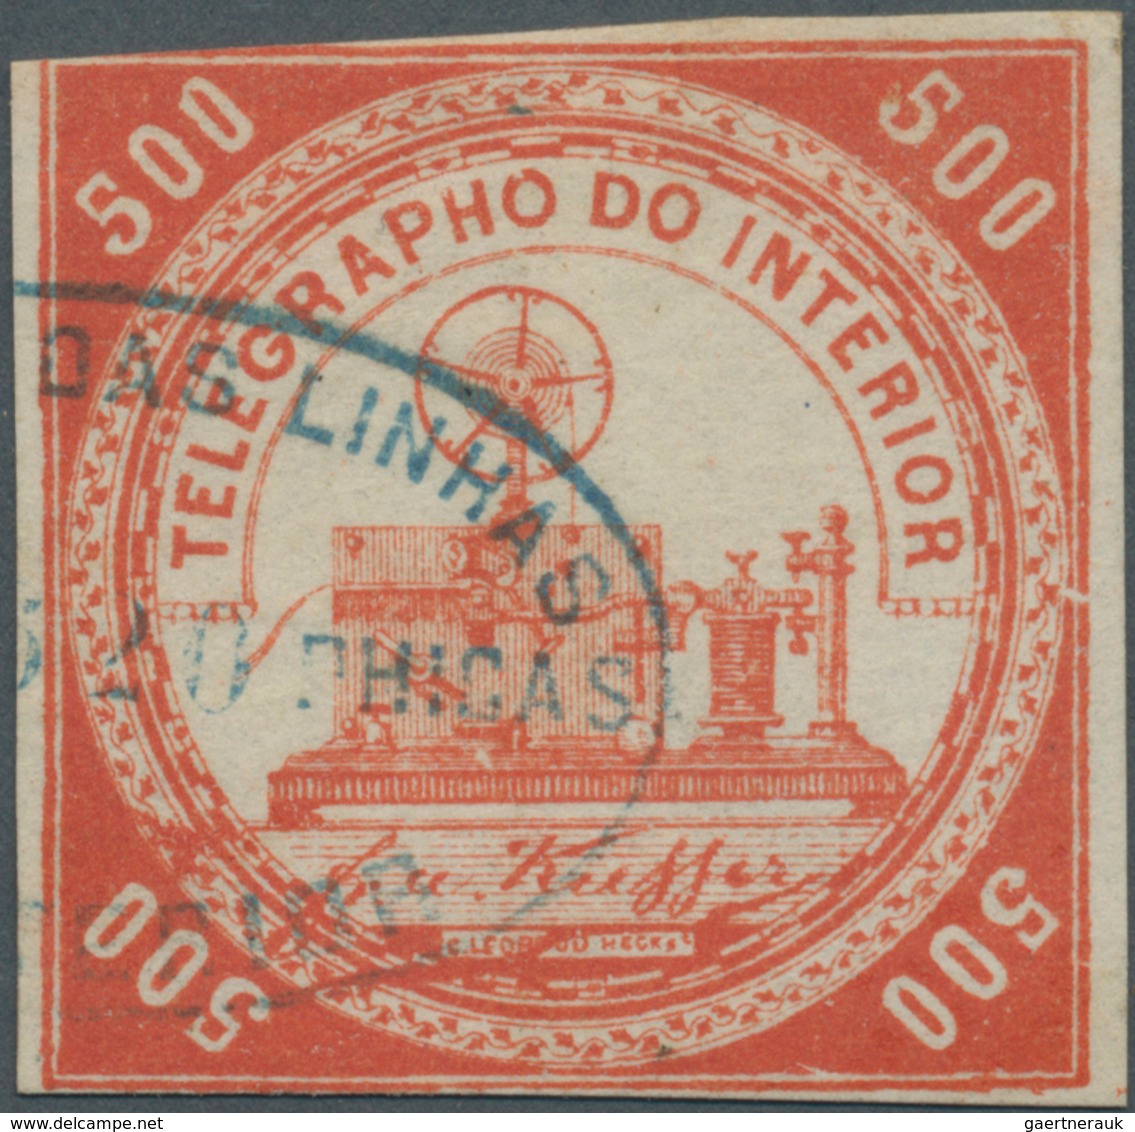 Brasilien - Telegrafenmarken: 1873, 500r. Vermilion, Wm "Lacroix Freres", Fresh Colour, Cut Into To - Telegraphenmarken